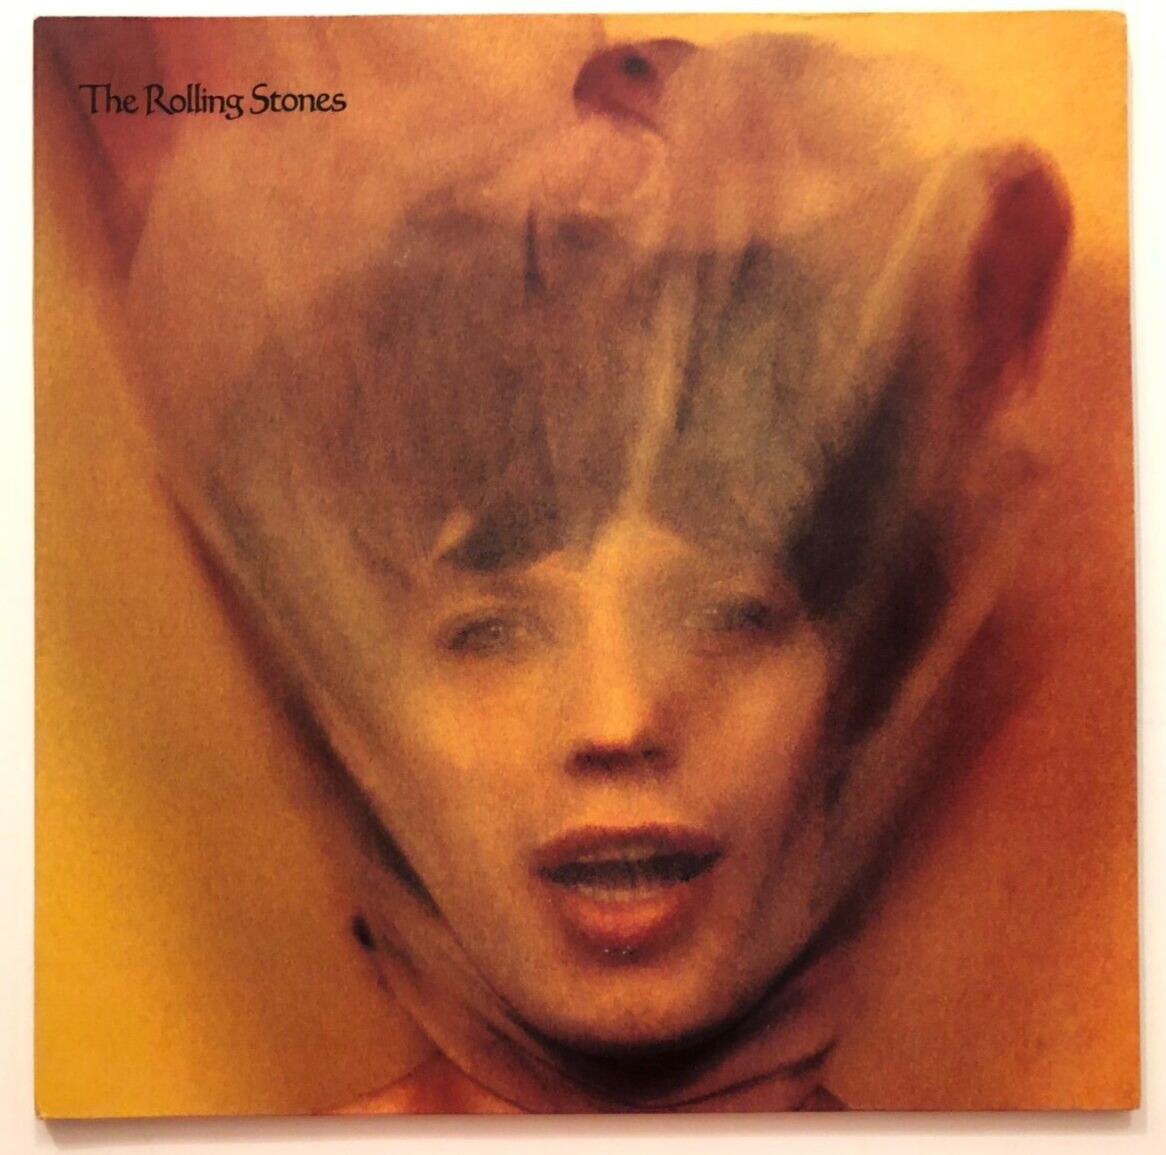 The Rolling Stones - Goats Head Soup - Japan Vinyl Insert - P-10336S